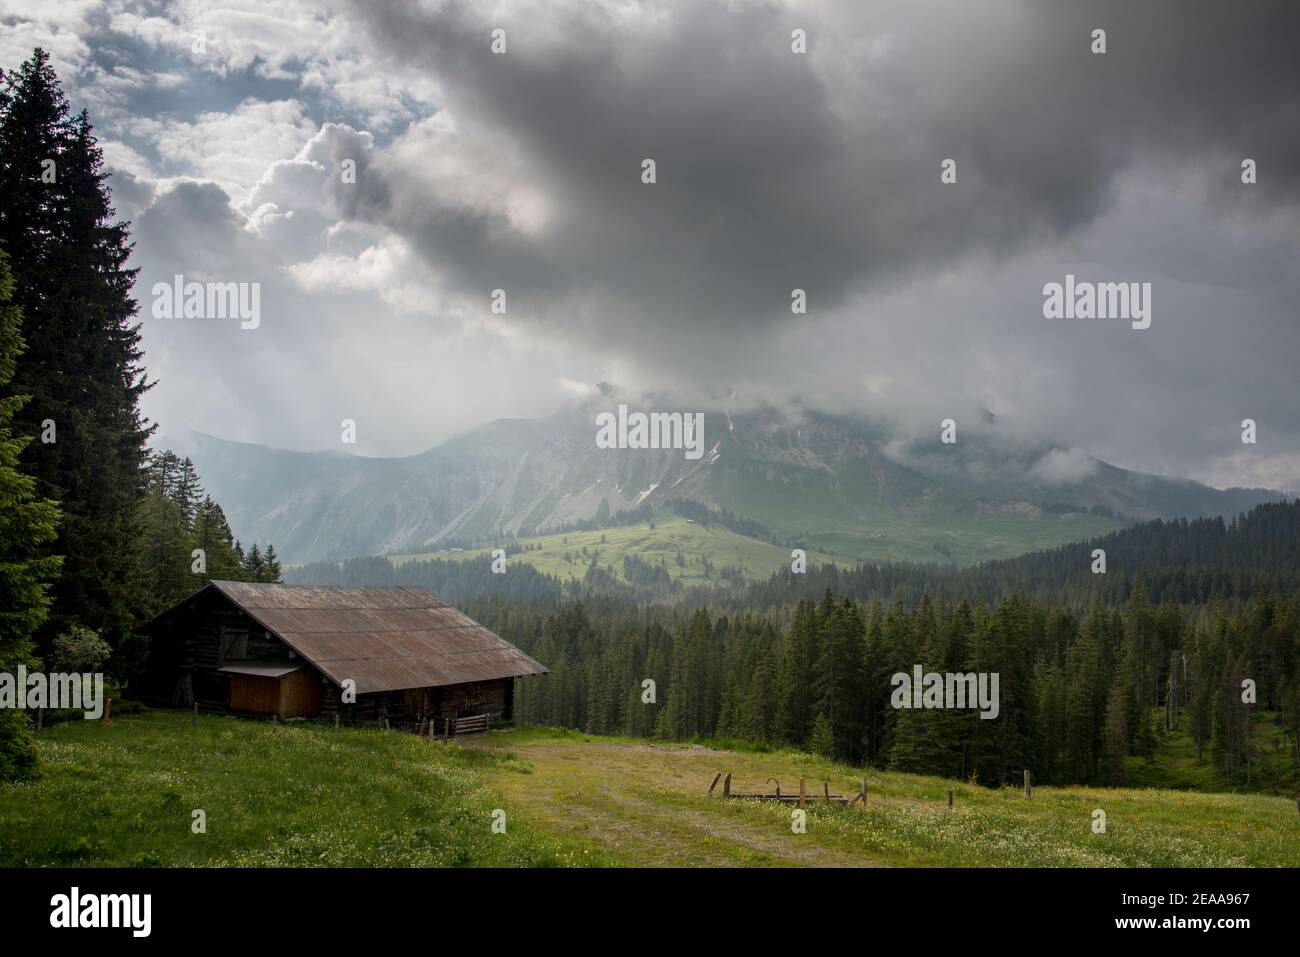 Mountain hut under an overcast sky Stock Photo